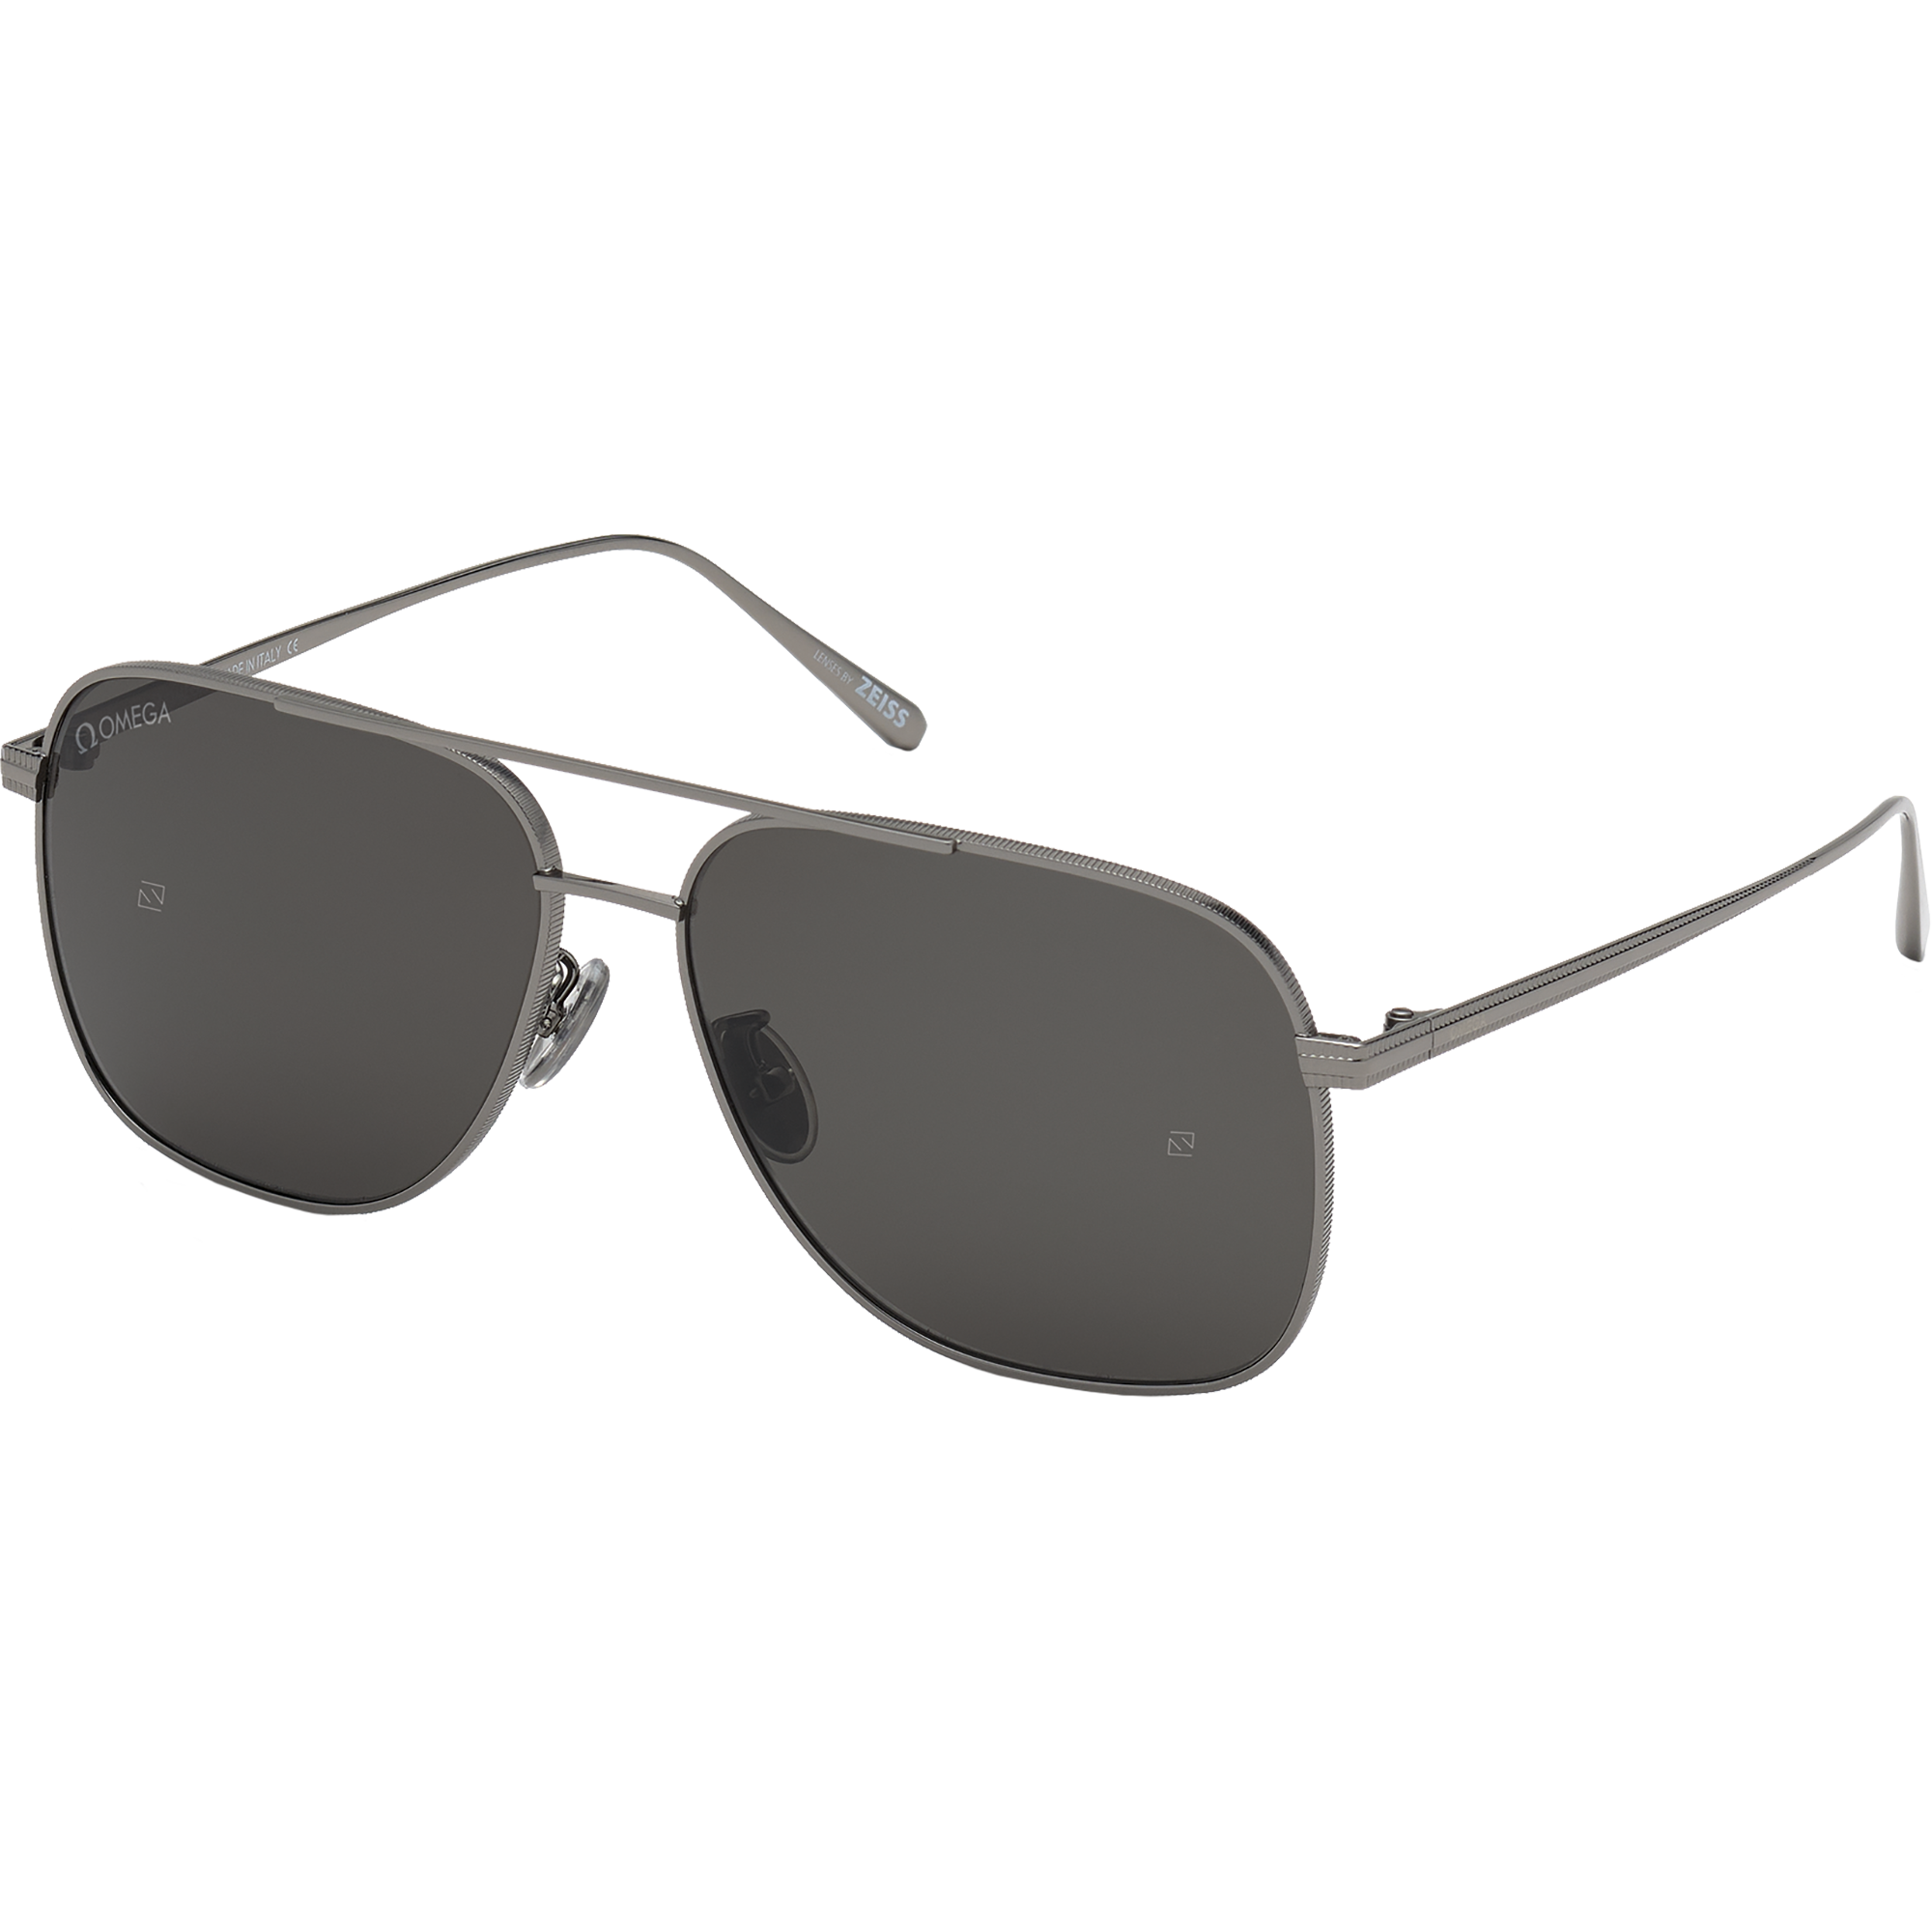 Pilot style Man Sunglasses OM0026-H6008D | OMEGA®